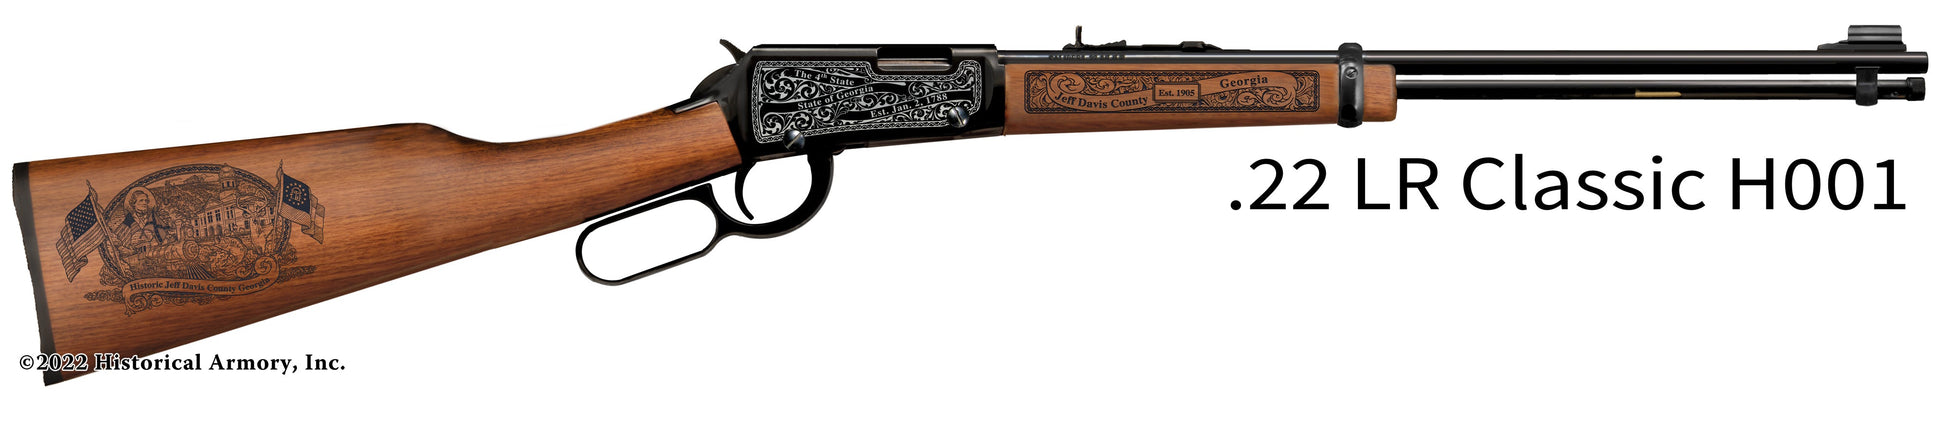 Jeff Davis County Georgia Engraved Henry H001 Rifle